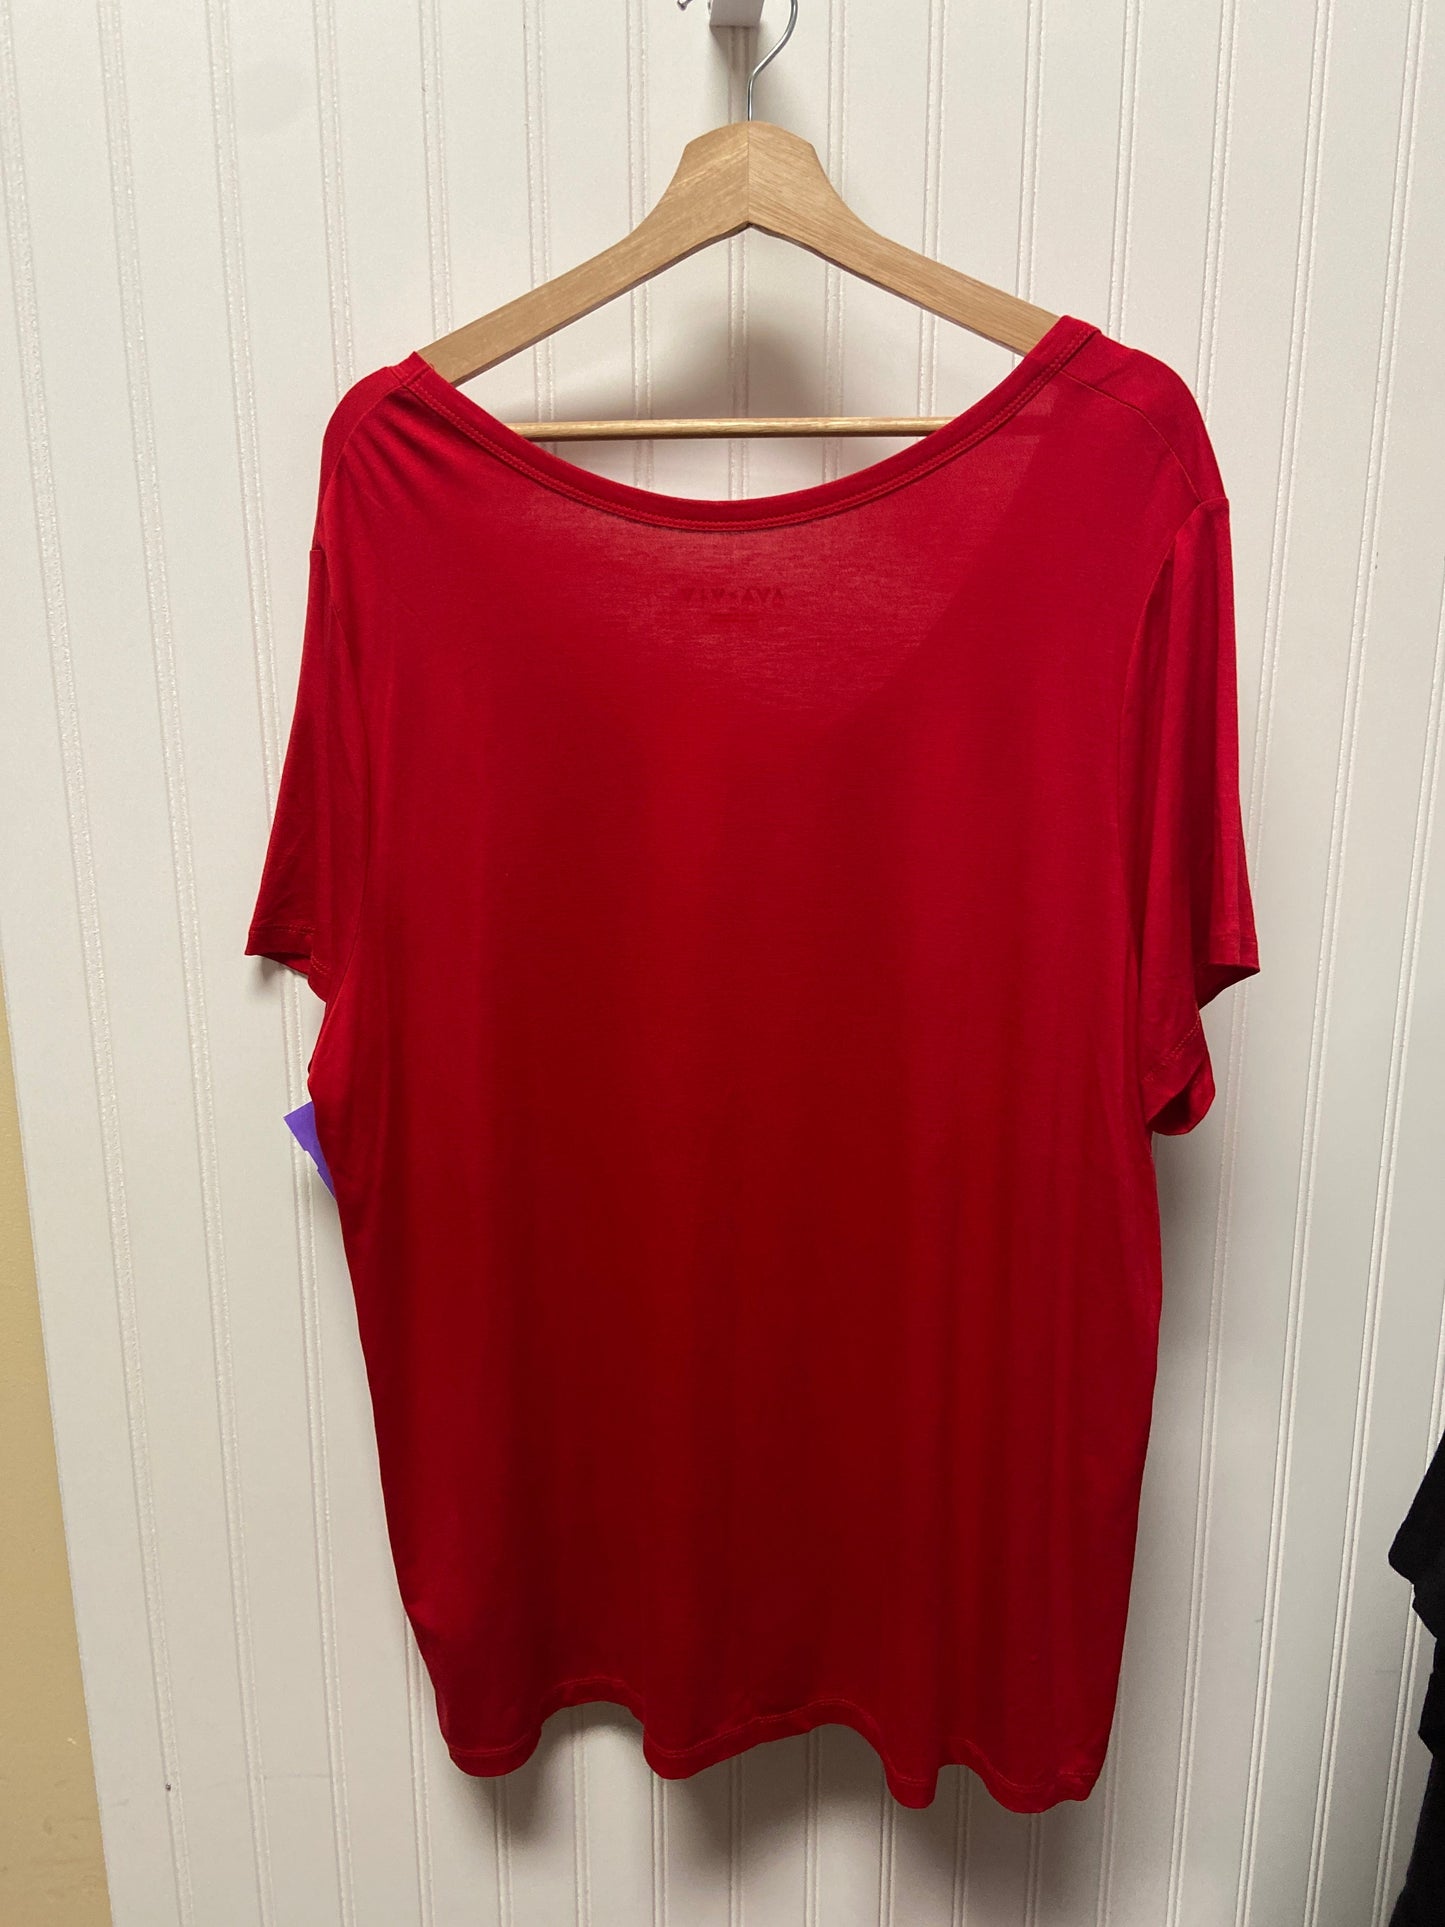 Red Top Short Sleeve Basic Ava & Viv, Size 2x